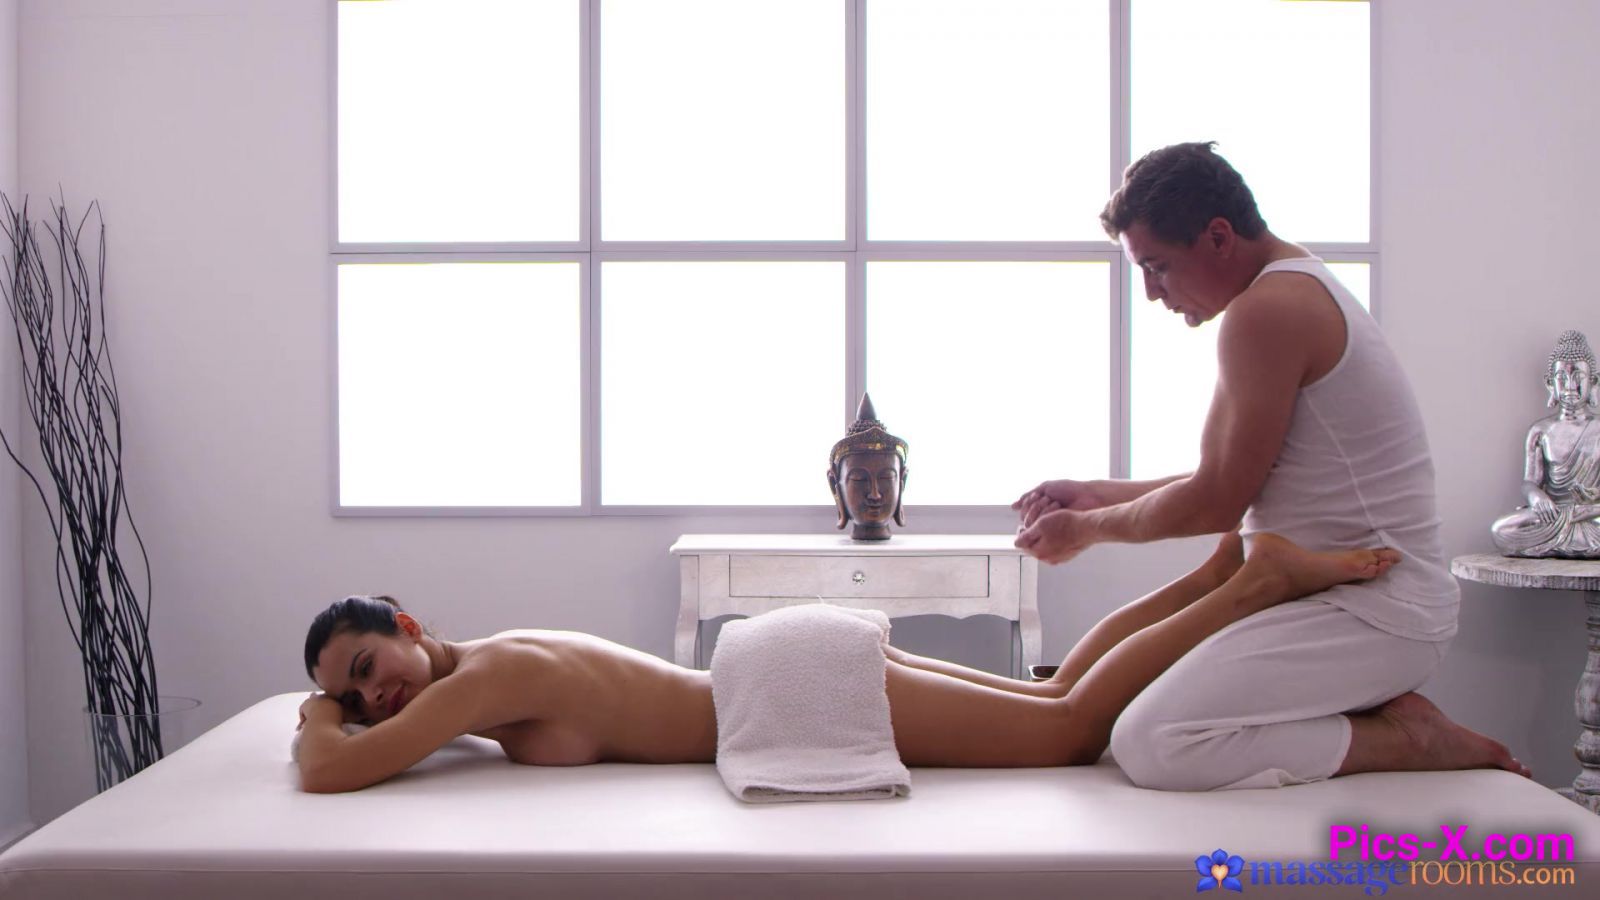 Sweet Italian girl's first massage - Massage Rooms - Image 1